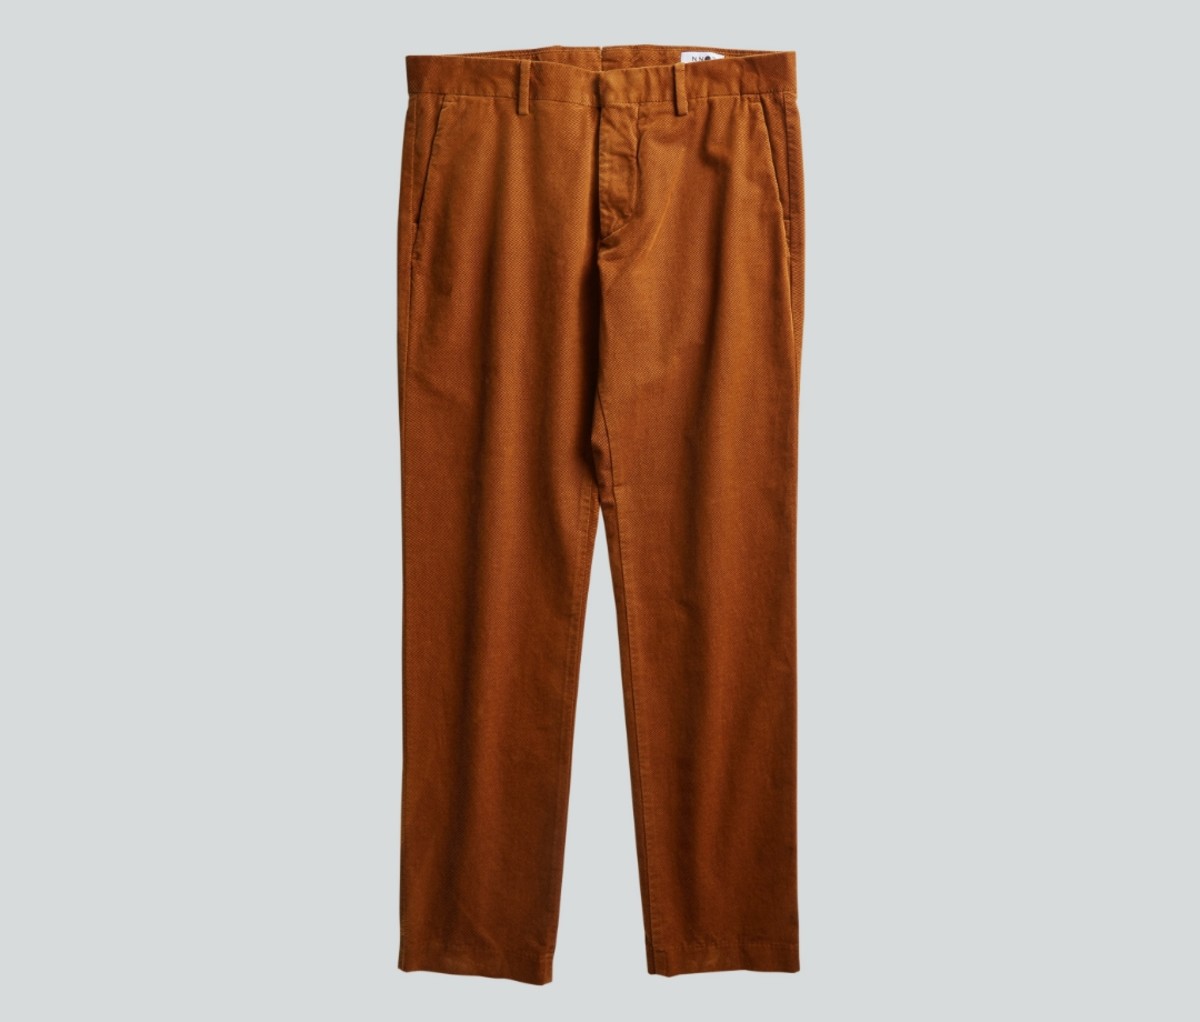 Corduroy Pants » Brooks Jeans Pattern » Helen's Closet Patterns